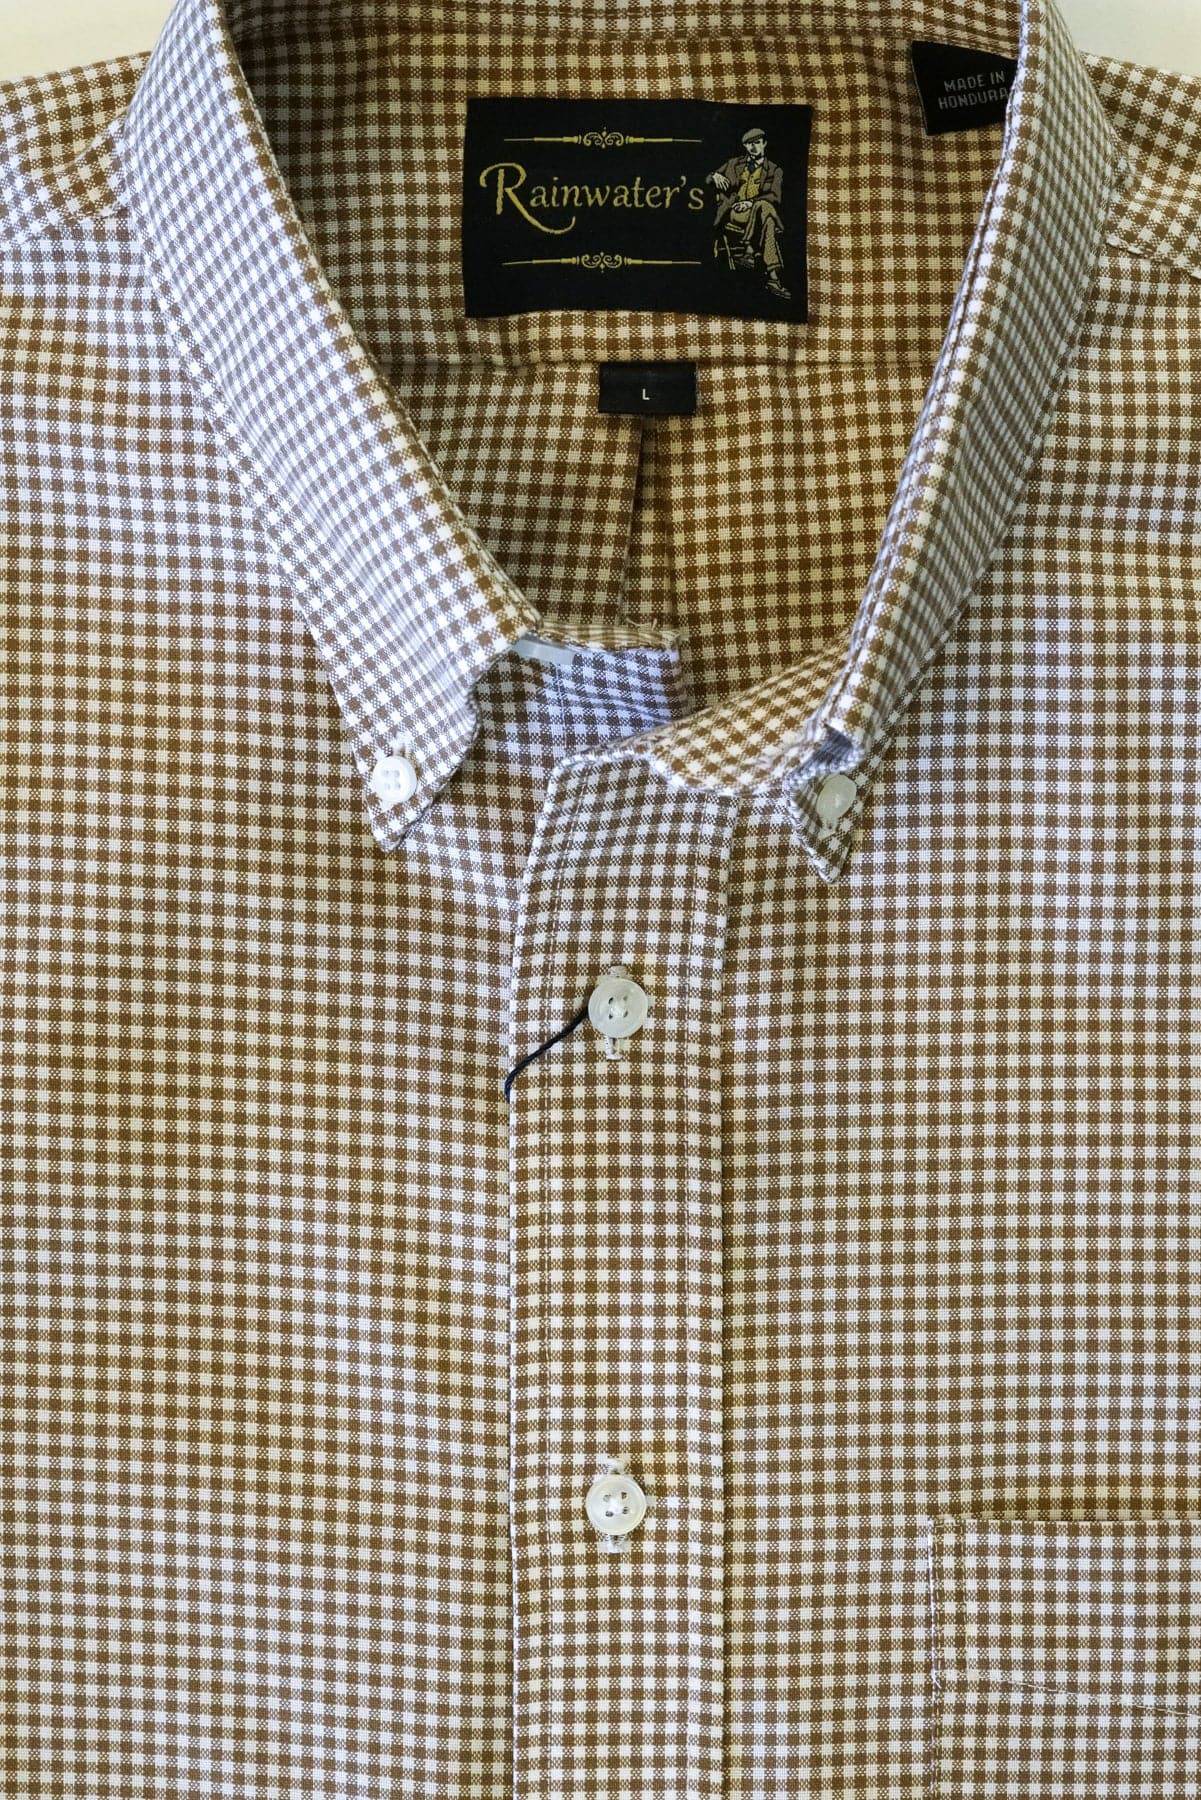 Khaki & White Gingham Oxford Cloth Button Down Sport Shirt by Rainwater's - Rainwater's Men's Clothing and Tuxedo Rental